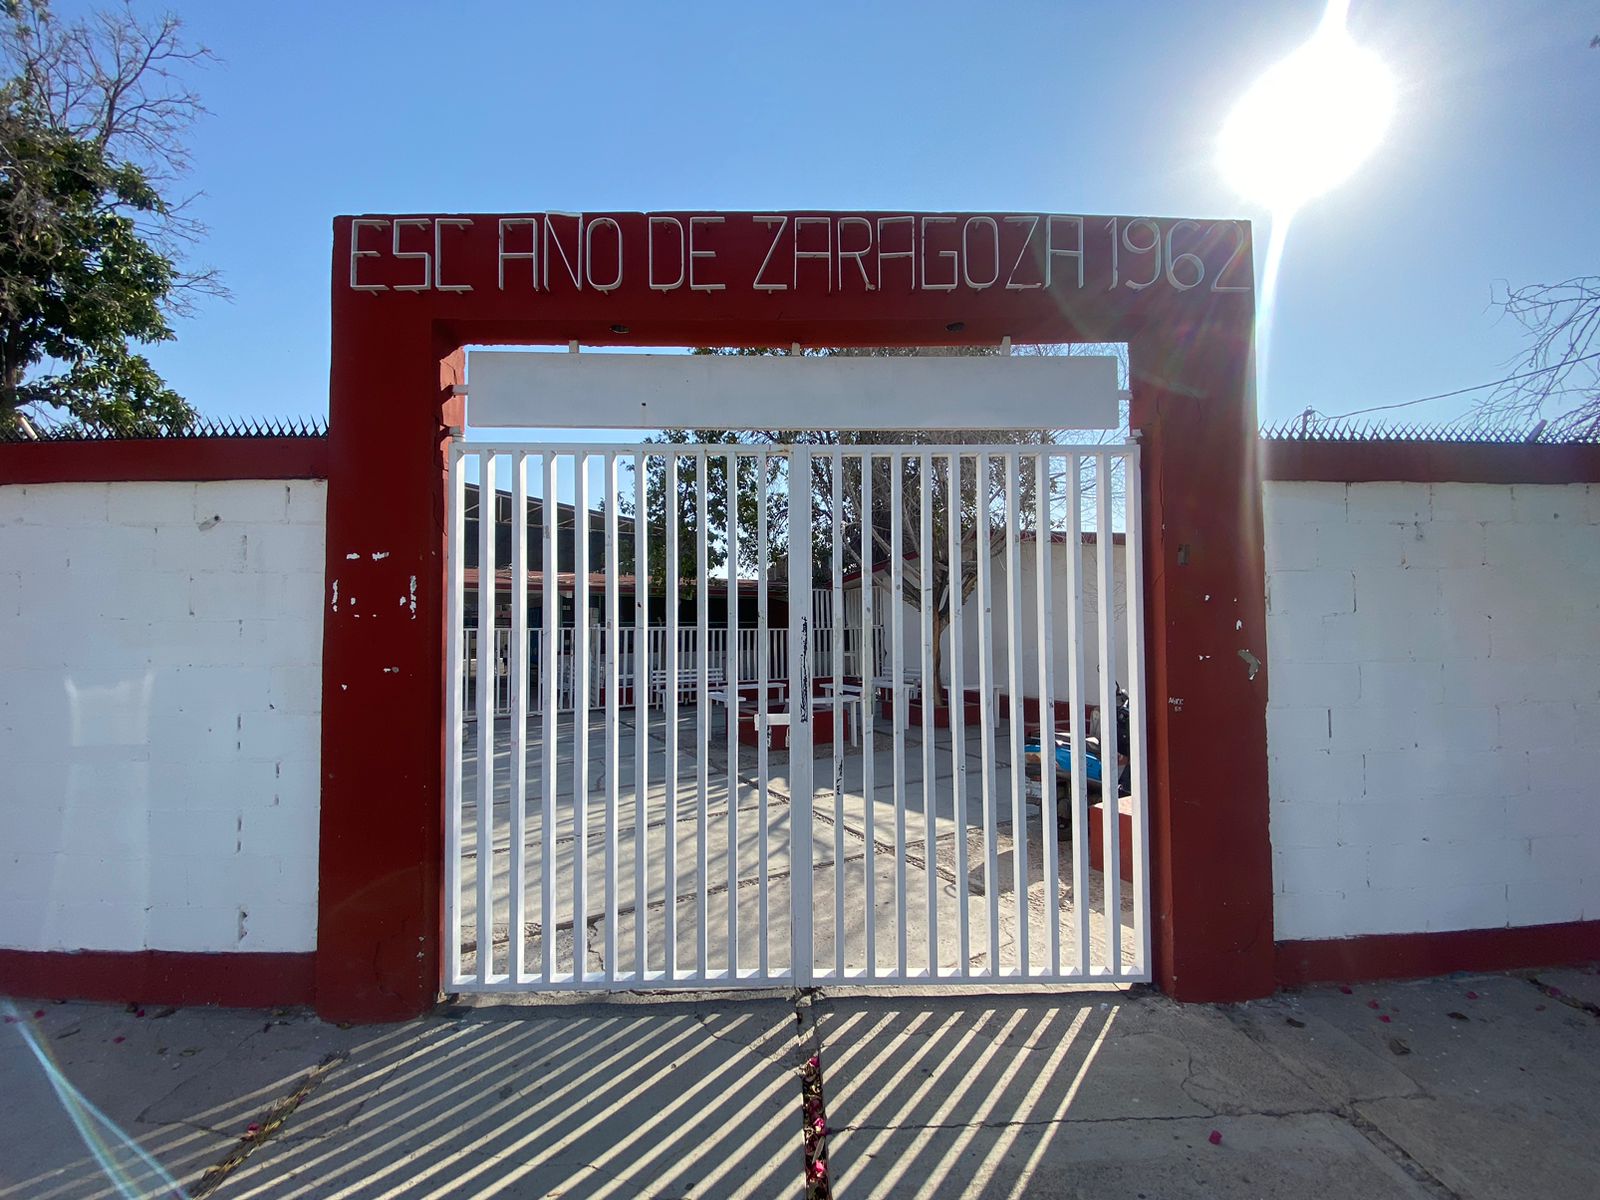 En plena ola de calor, se roban bomba de agua de primaria 'Año de Zaragoza 1962' de Torreón